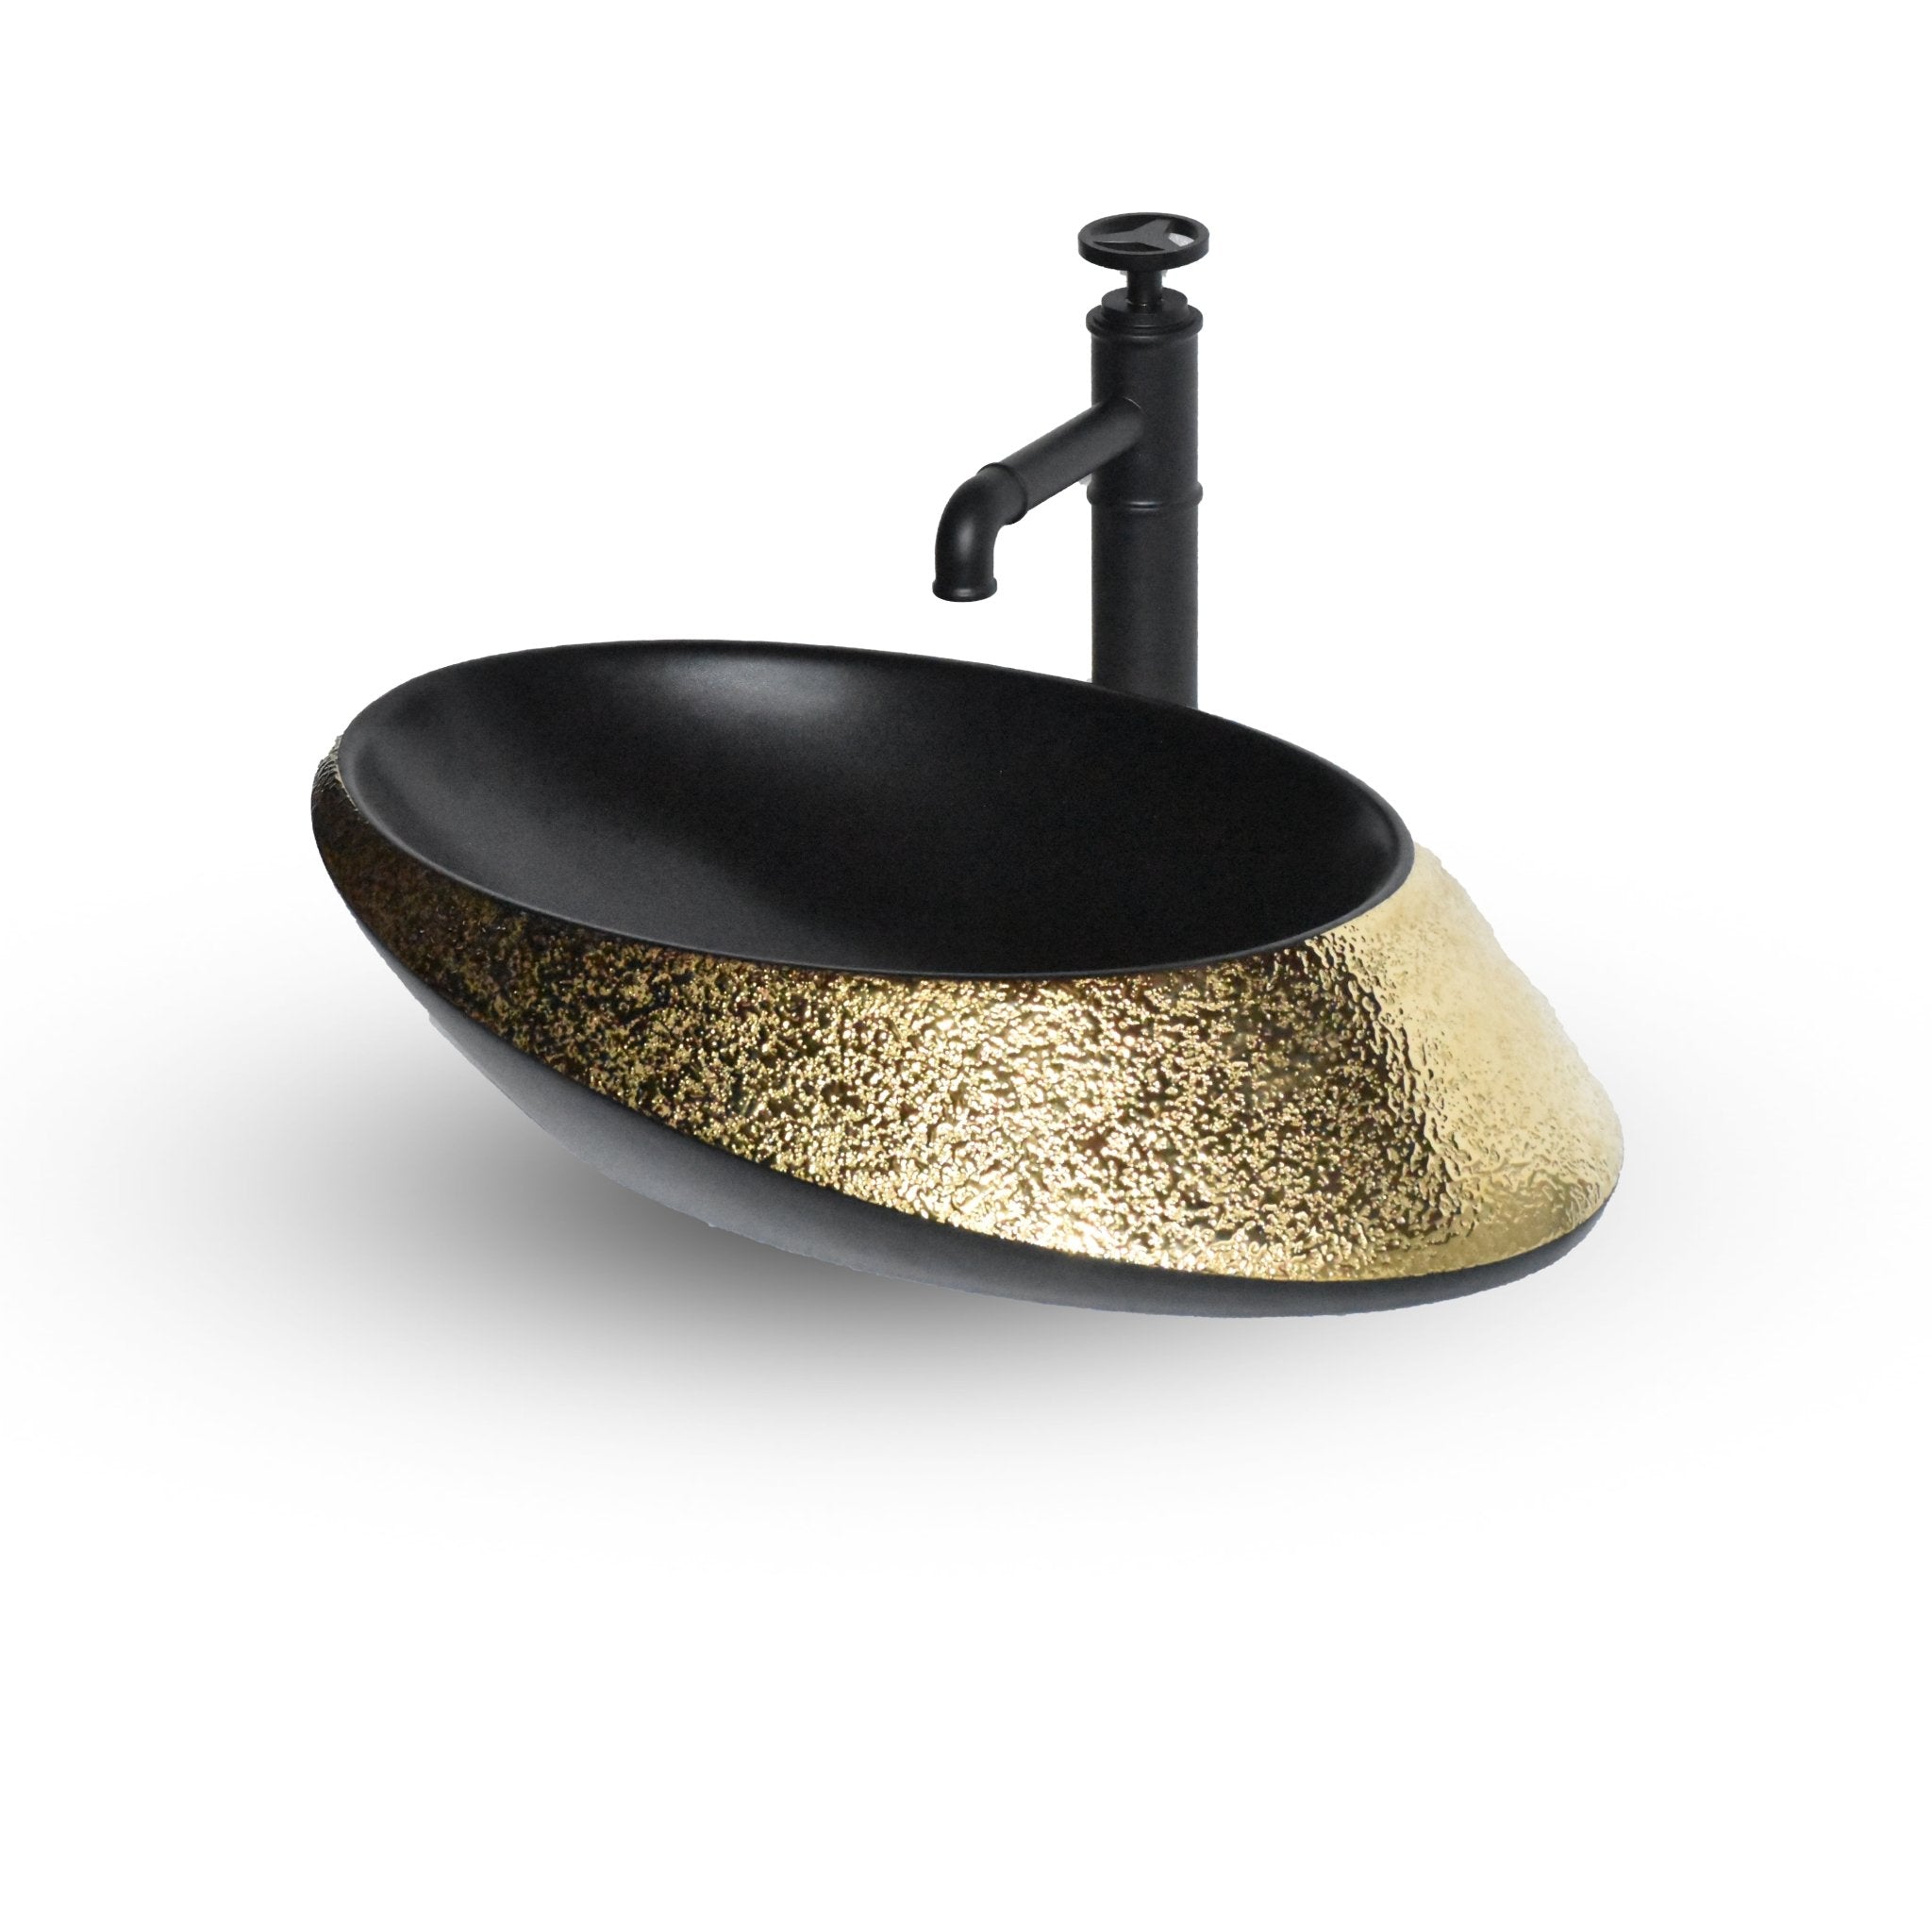 InArt Oval Bathroom Ceramic Vessel Sink Art Basin in Gold Black Color - InArt-Studio-USA